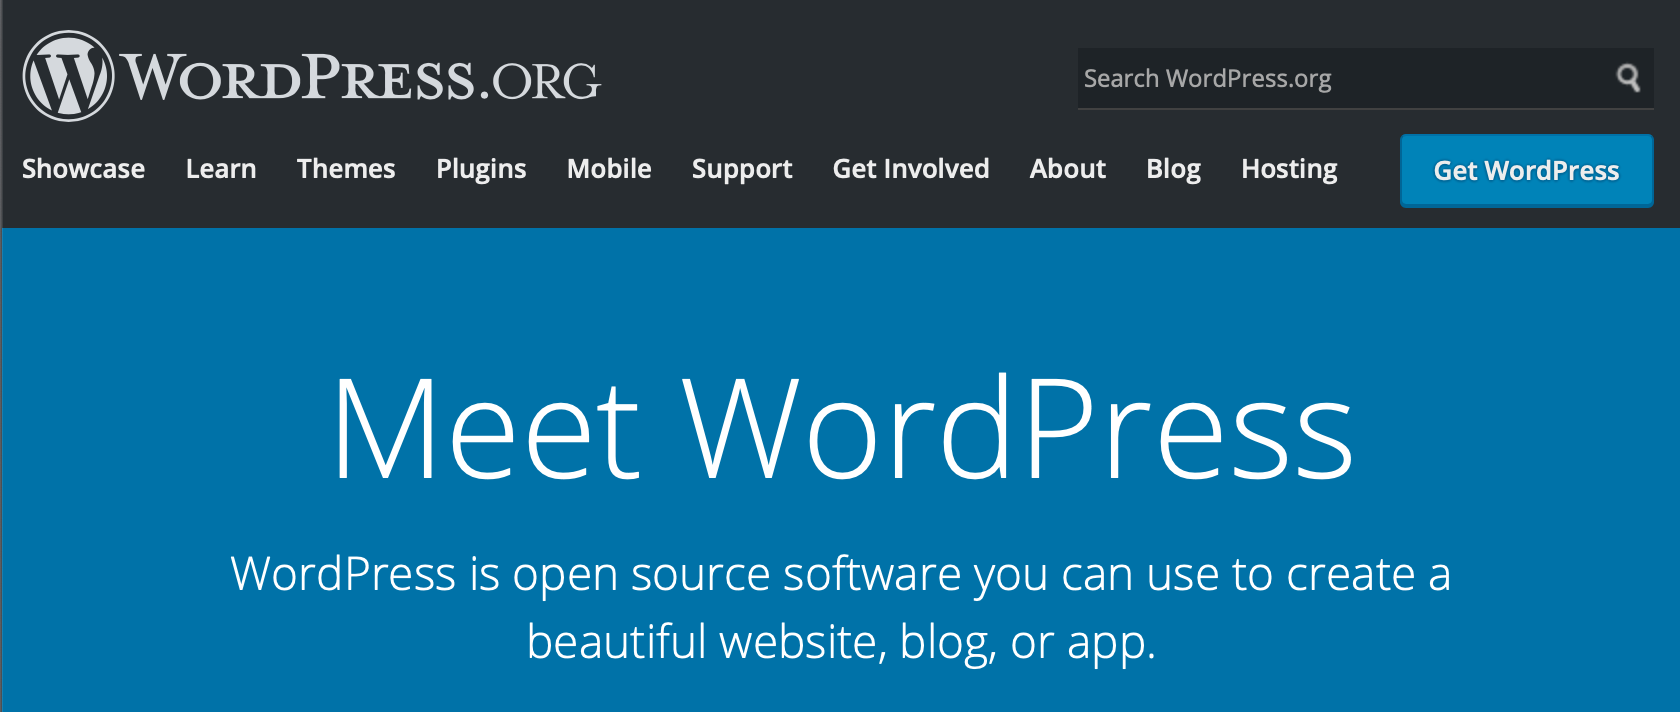 wordpress.org, home page